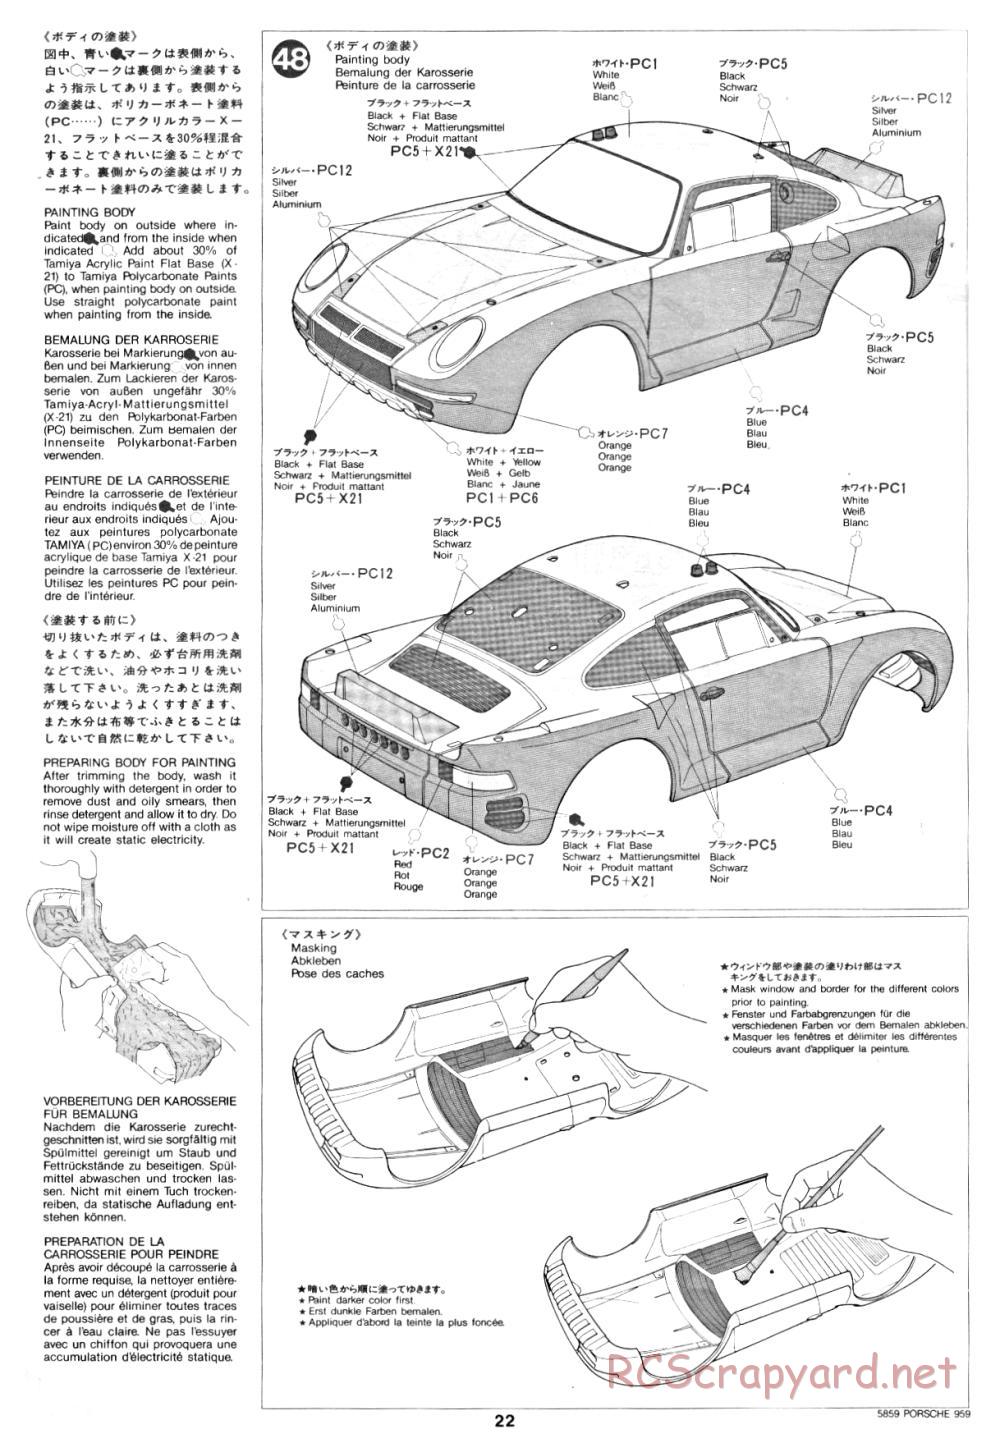 Tamiya - Porsche 959 - 58059 - Manual - Page 22